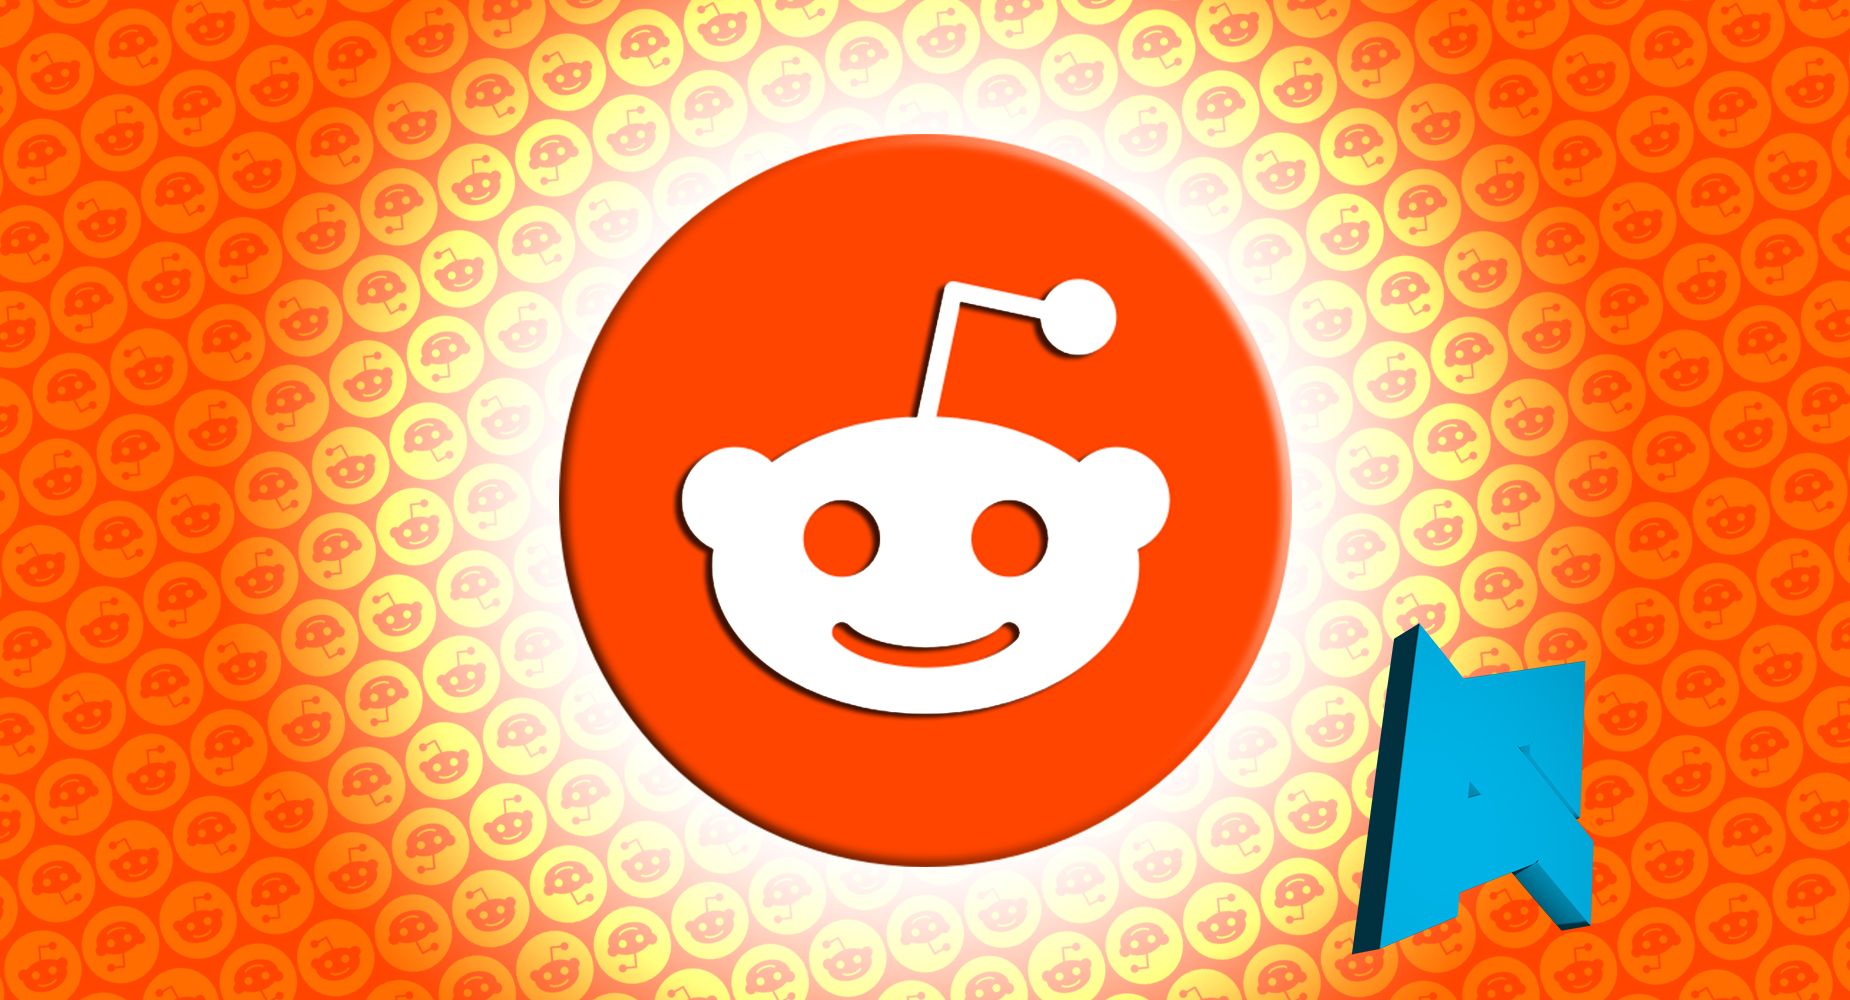 Reddit logo with AP logo over field of Reddit logos